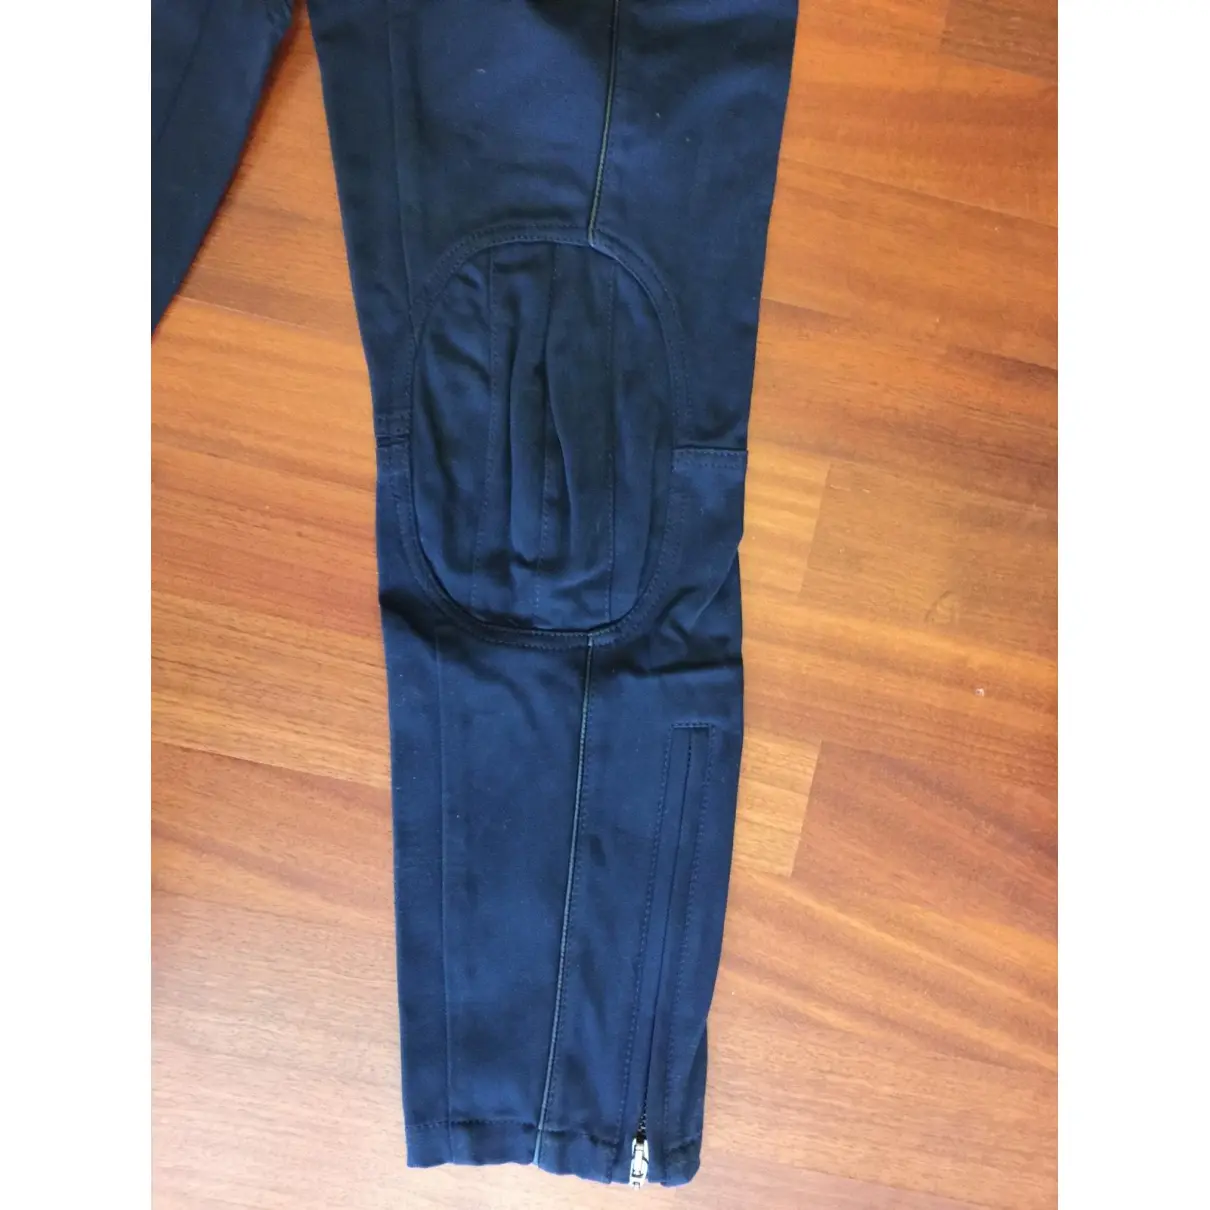 Dondup Slim pants for sale